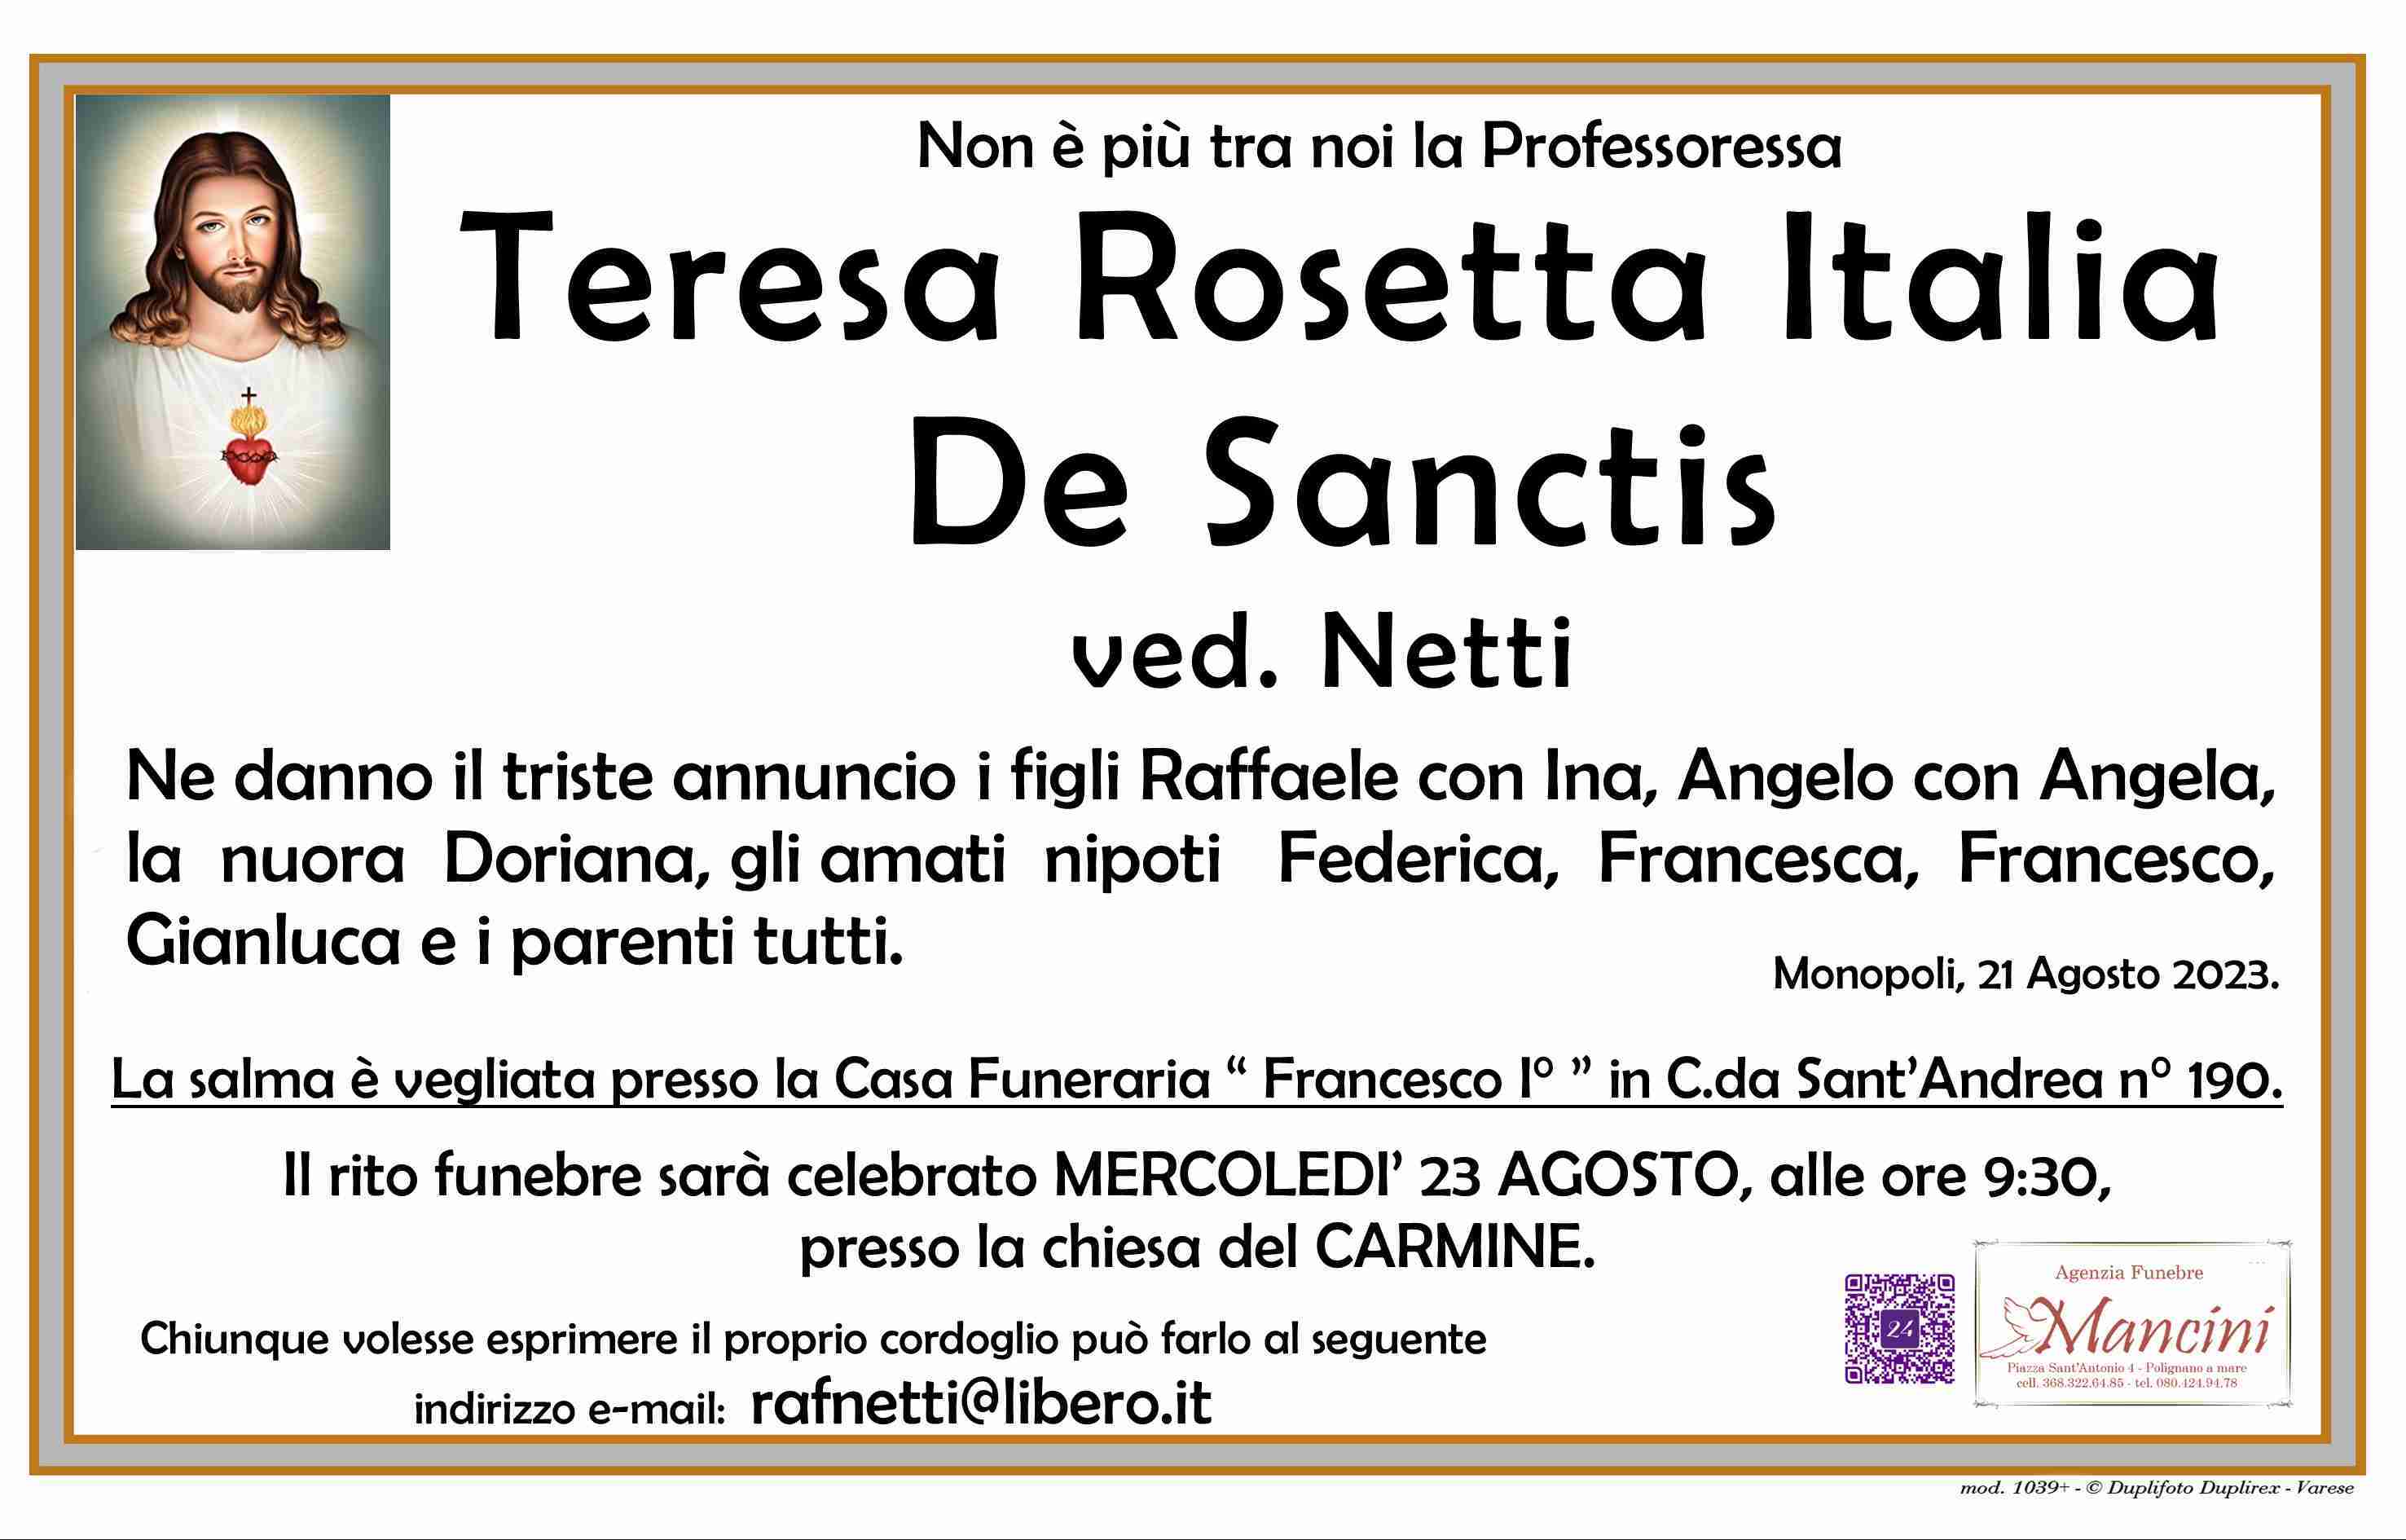 Teresa Rosetta Italia De Sanctis